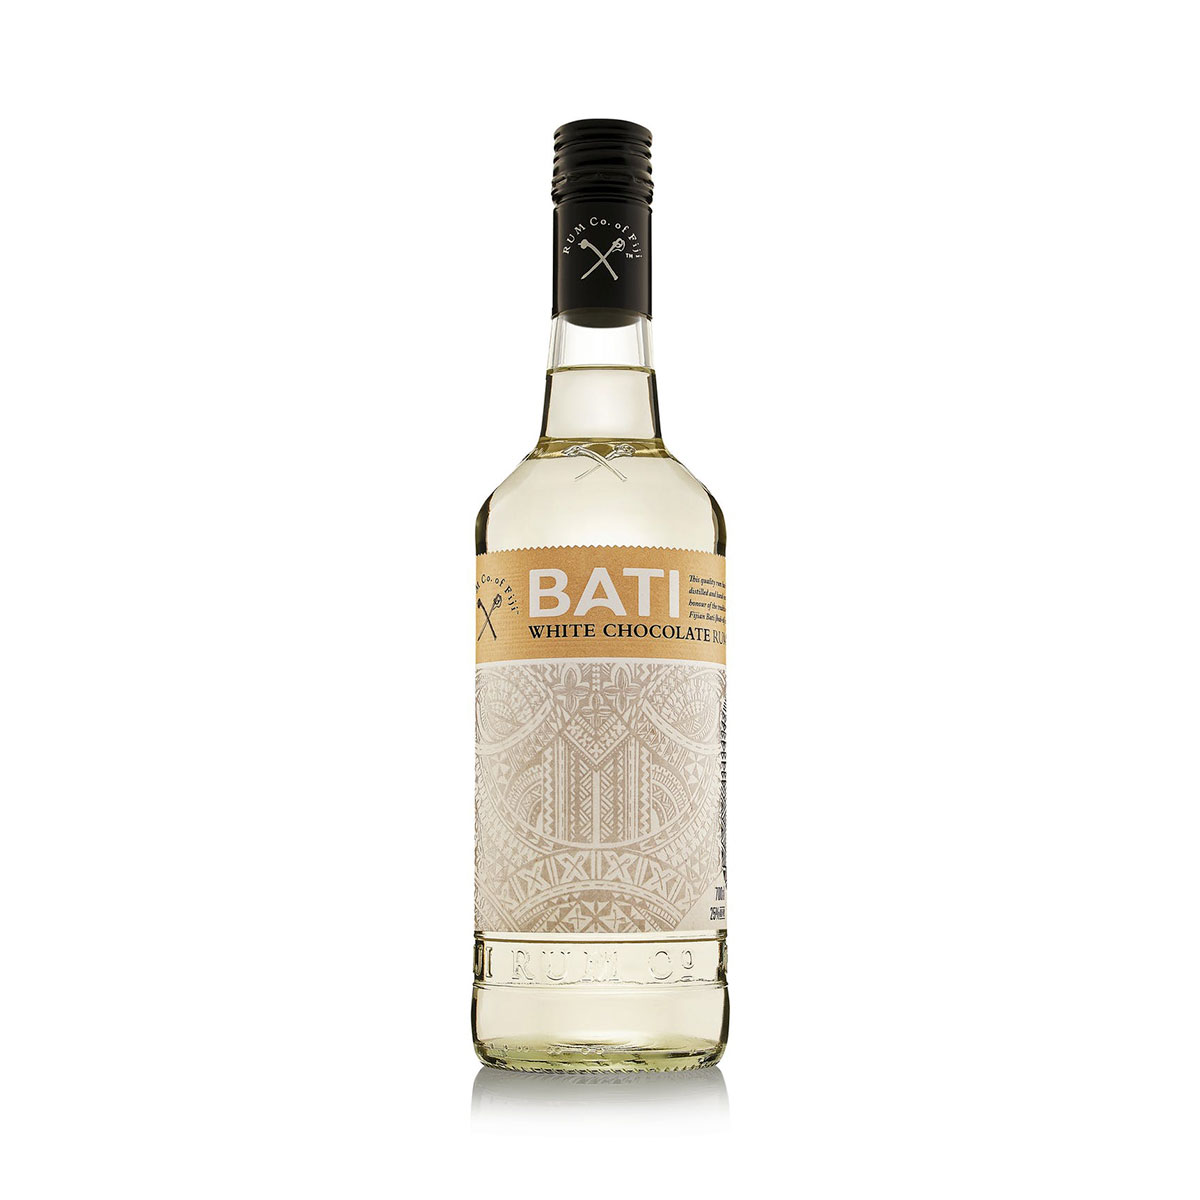 Weiße Schokolade Rum Likör, Bati 0,7l - 25% Vol.